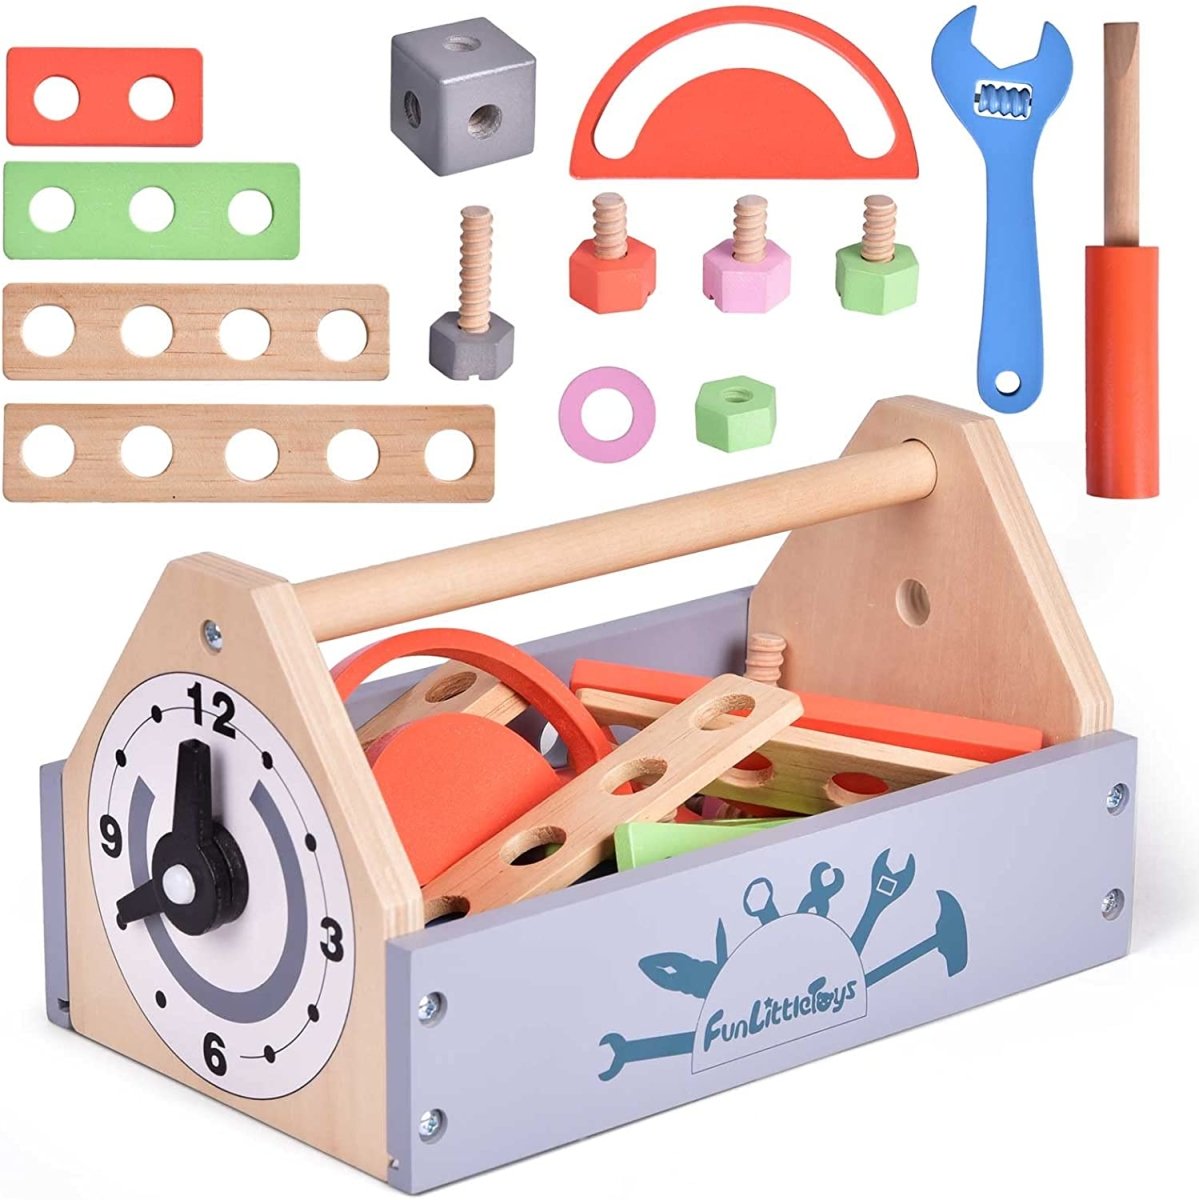 Children's Construction Tools - IPPINKA